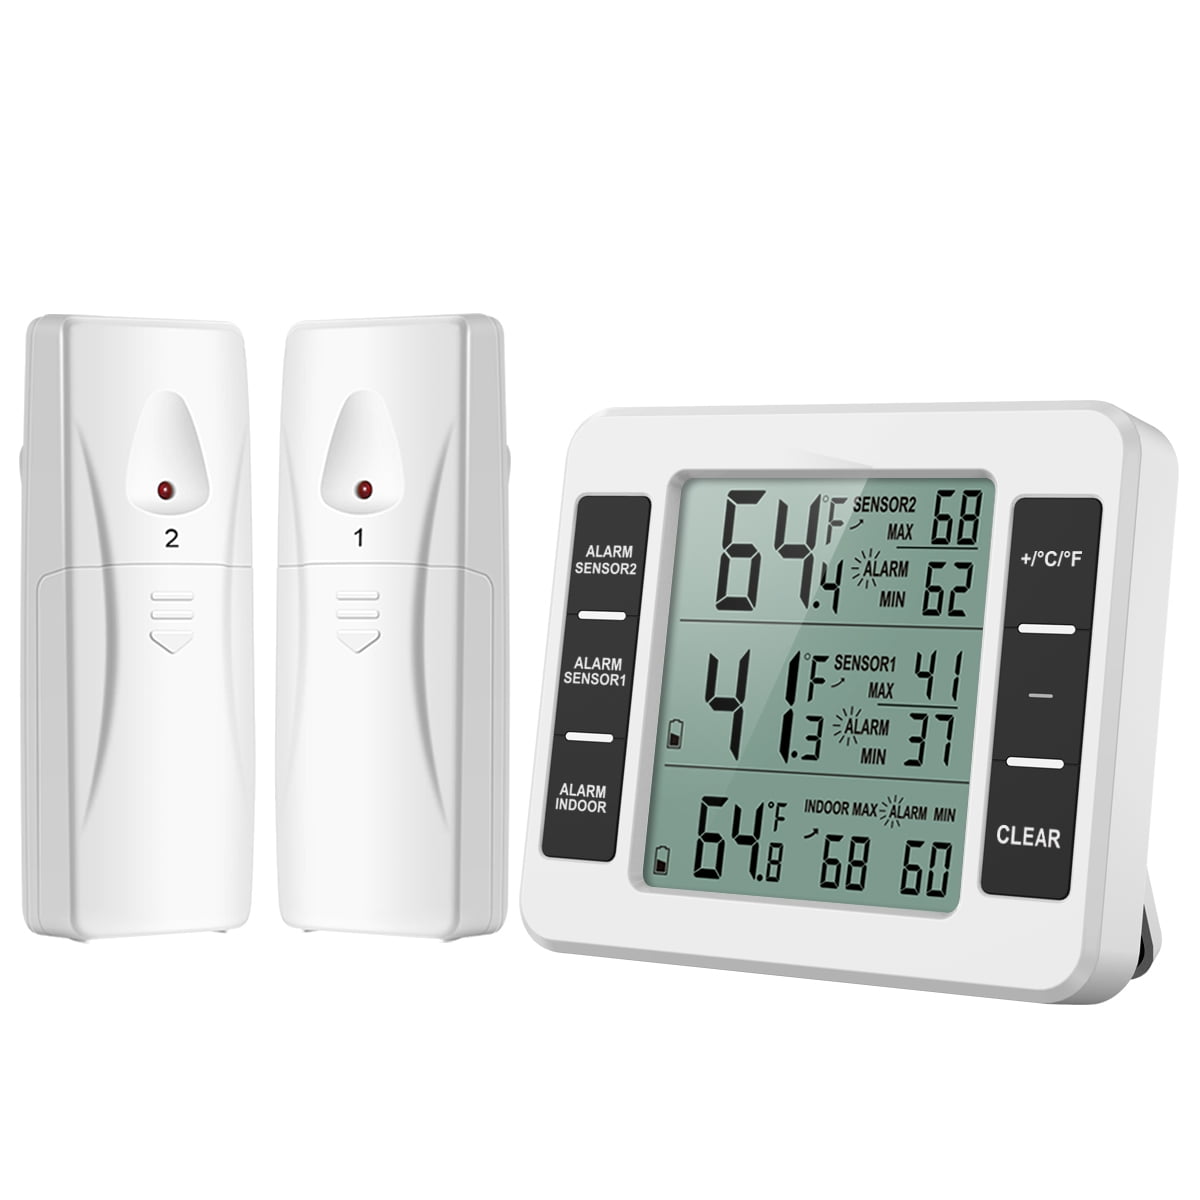 ORIA Refrigerator Digital Thermometer Wireless Freezer Thermometer